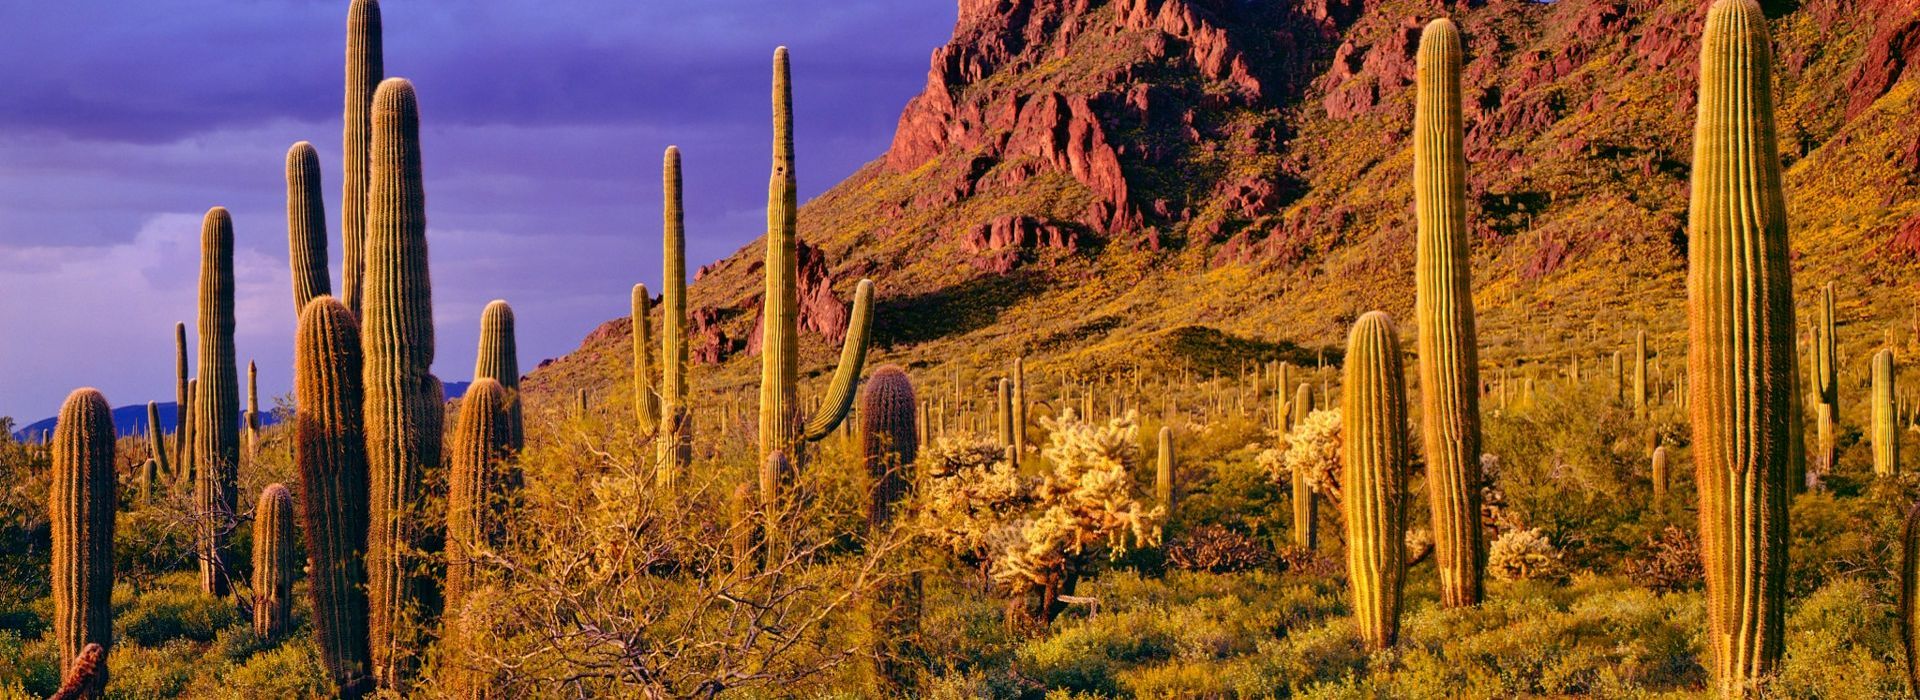 canyon-ranch-tucson-destination-sonoran-desert-cactus.jpg